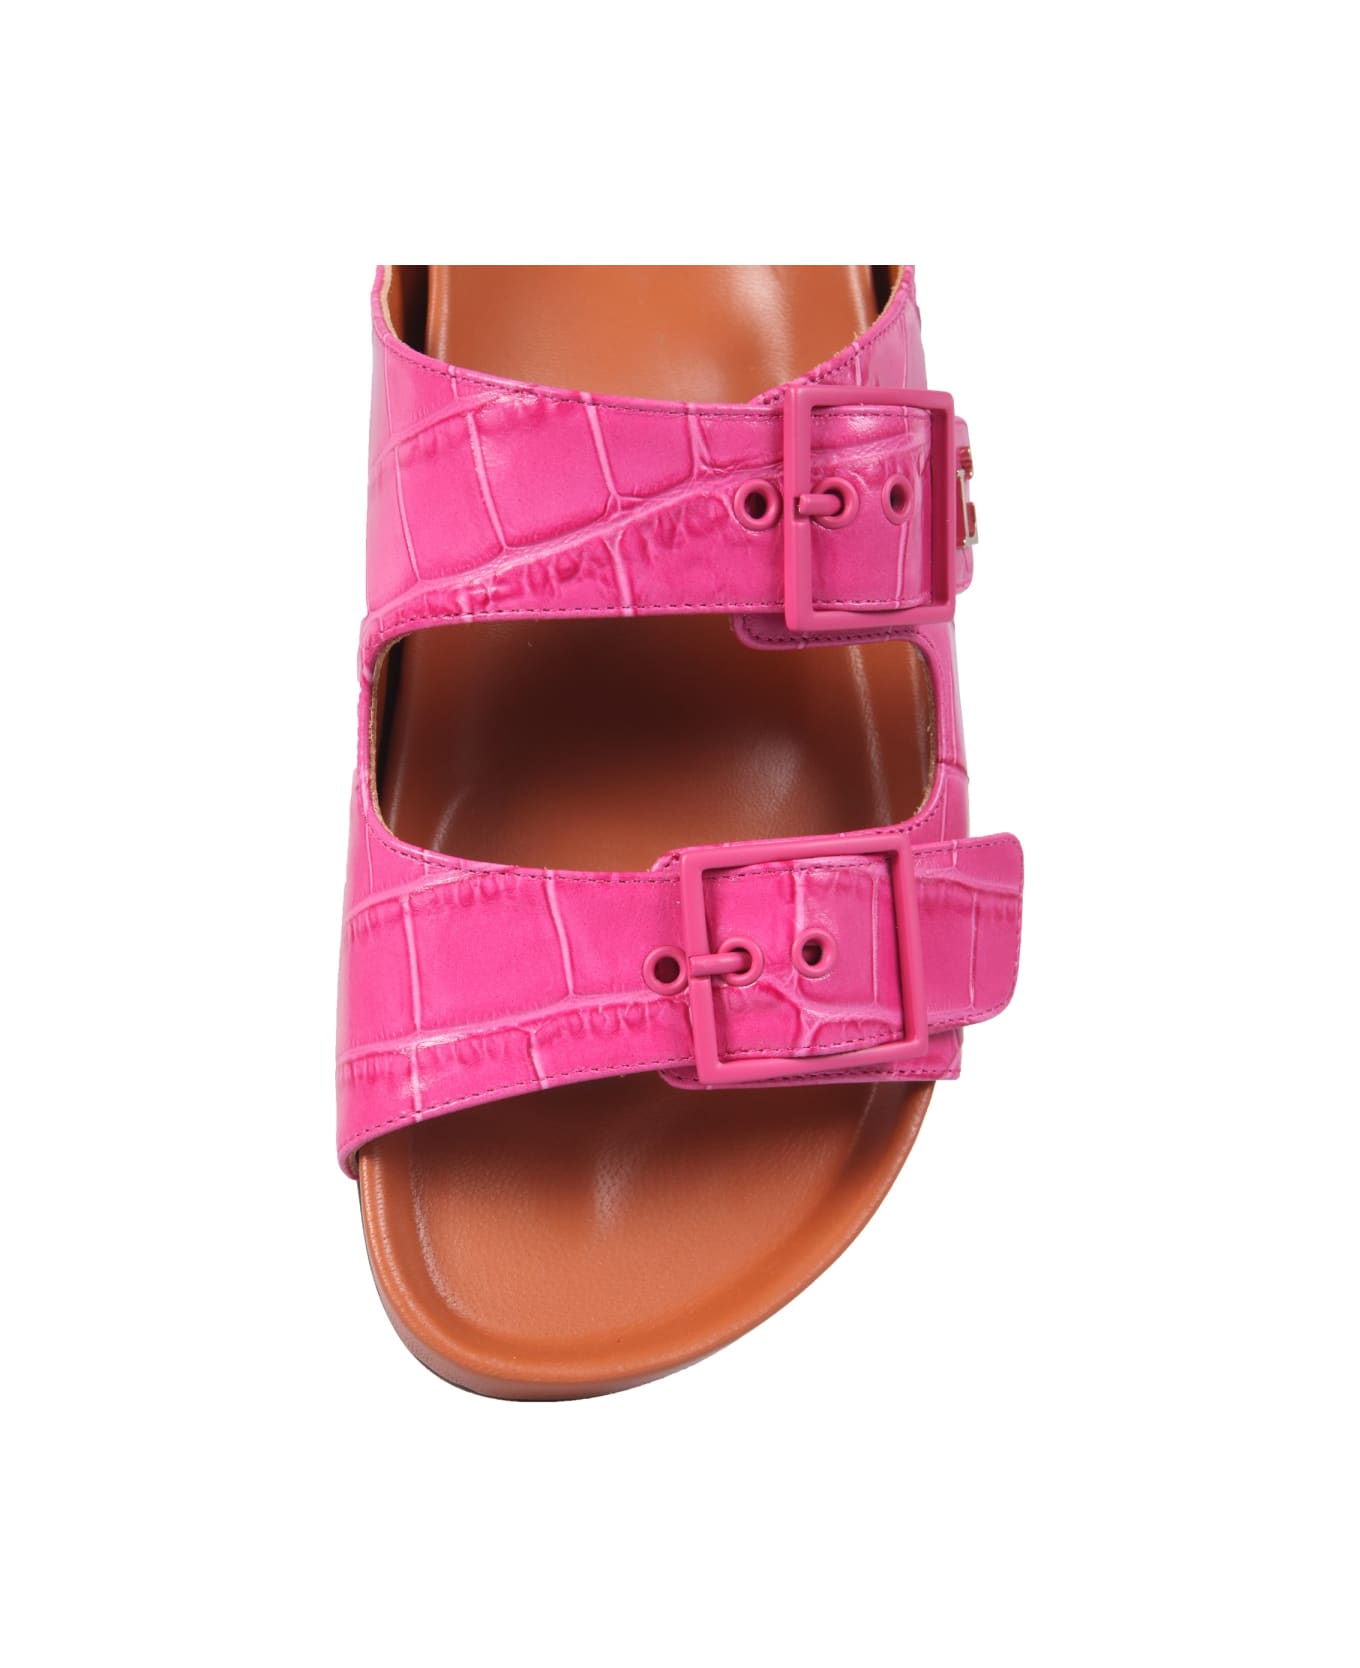 L'Autre Chose Sandals With Coconut Print Leather - FUCHSIA サンダル